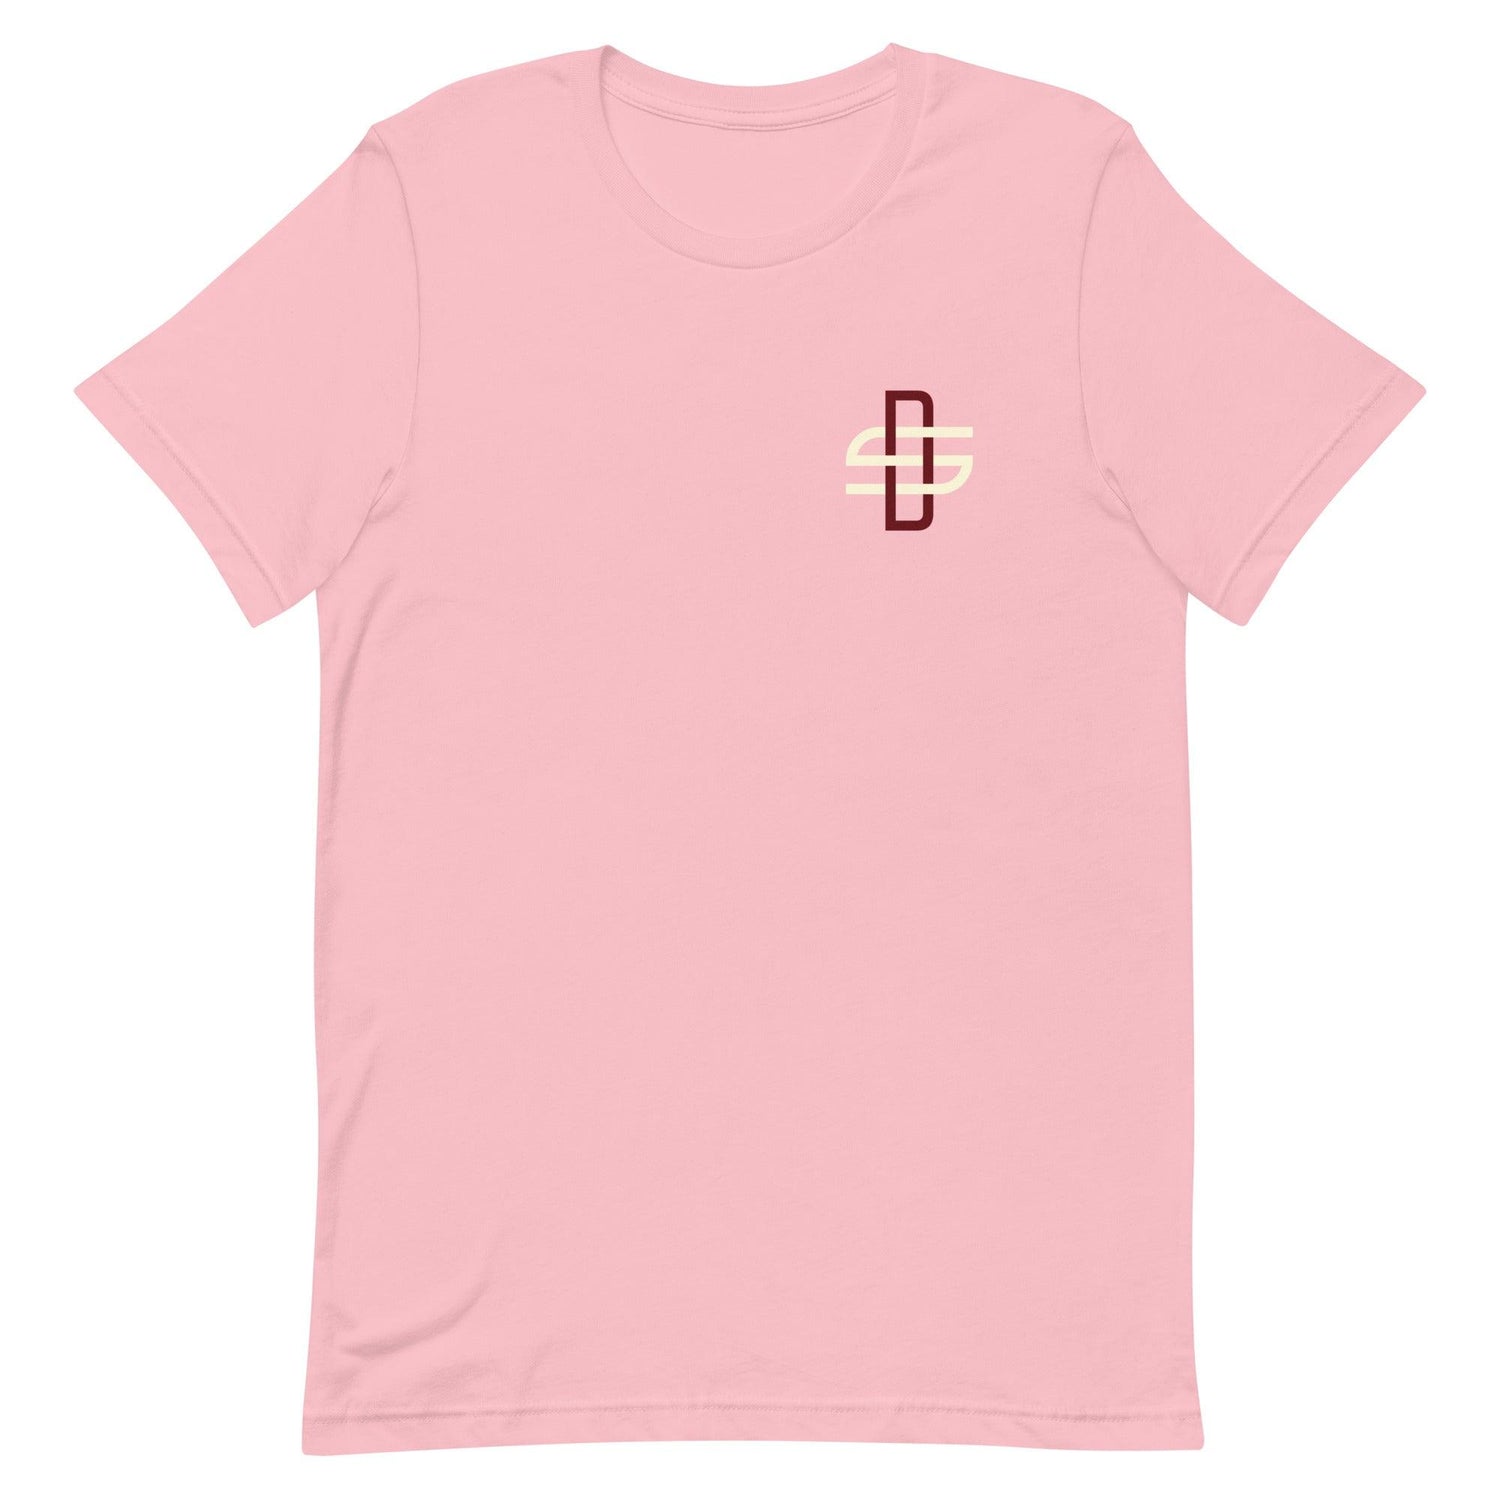 Davon Sears "Essential" t-shirt - Fan Arch